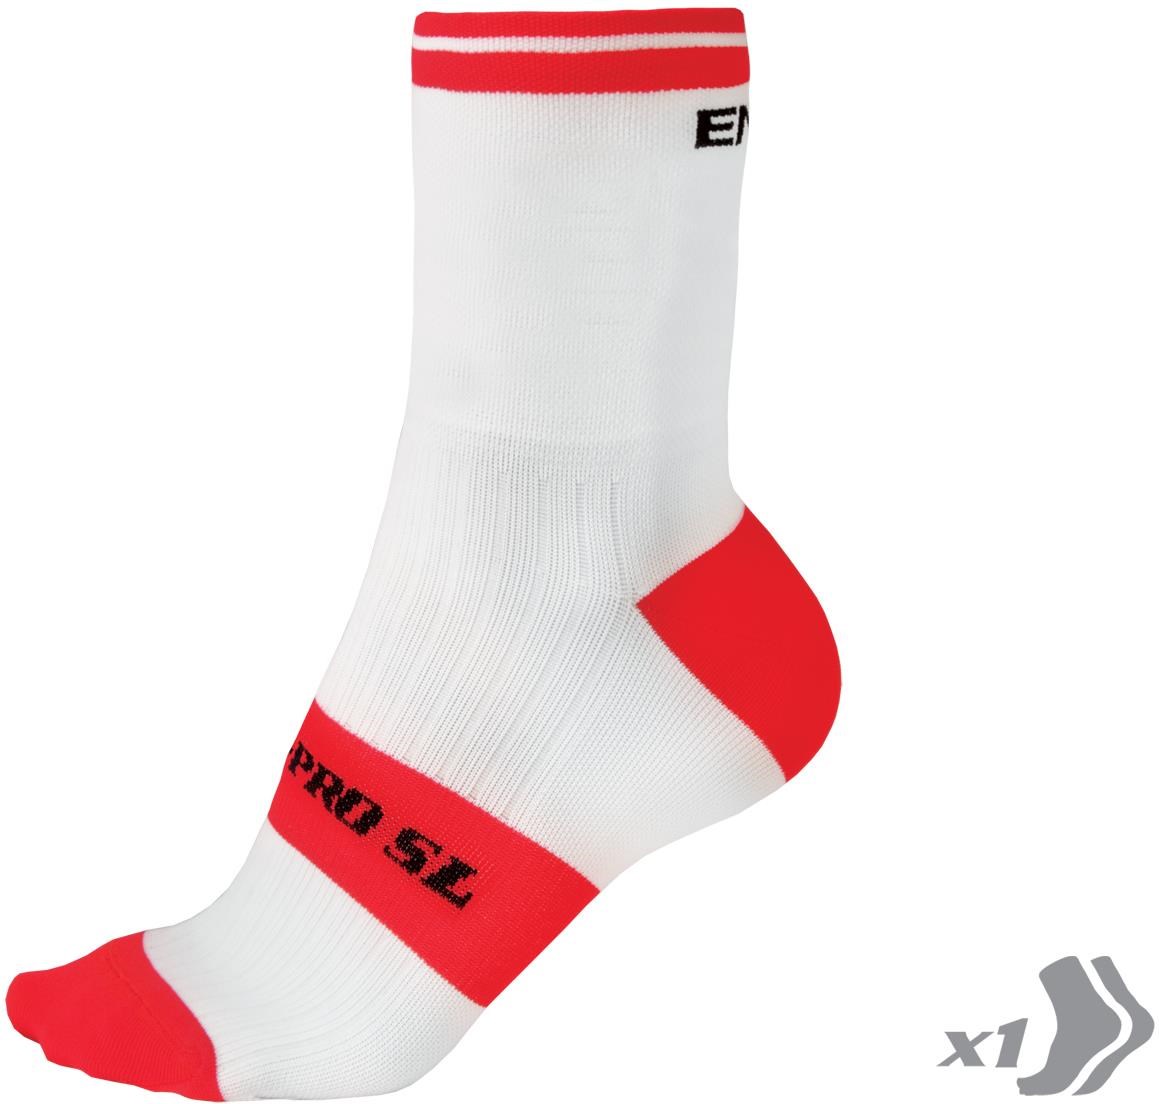 Endura FS260 Pro SL Cycling Socks